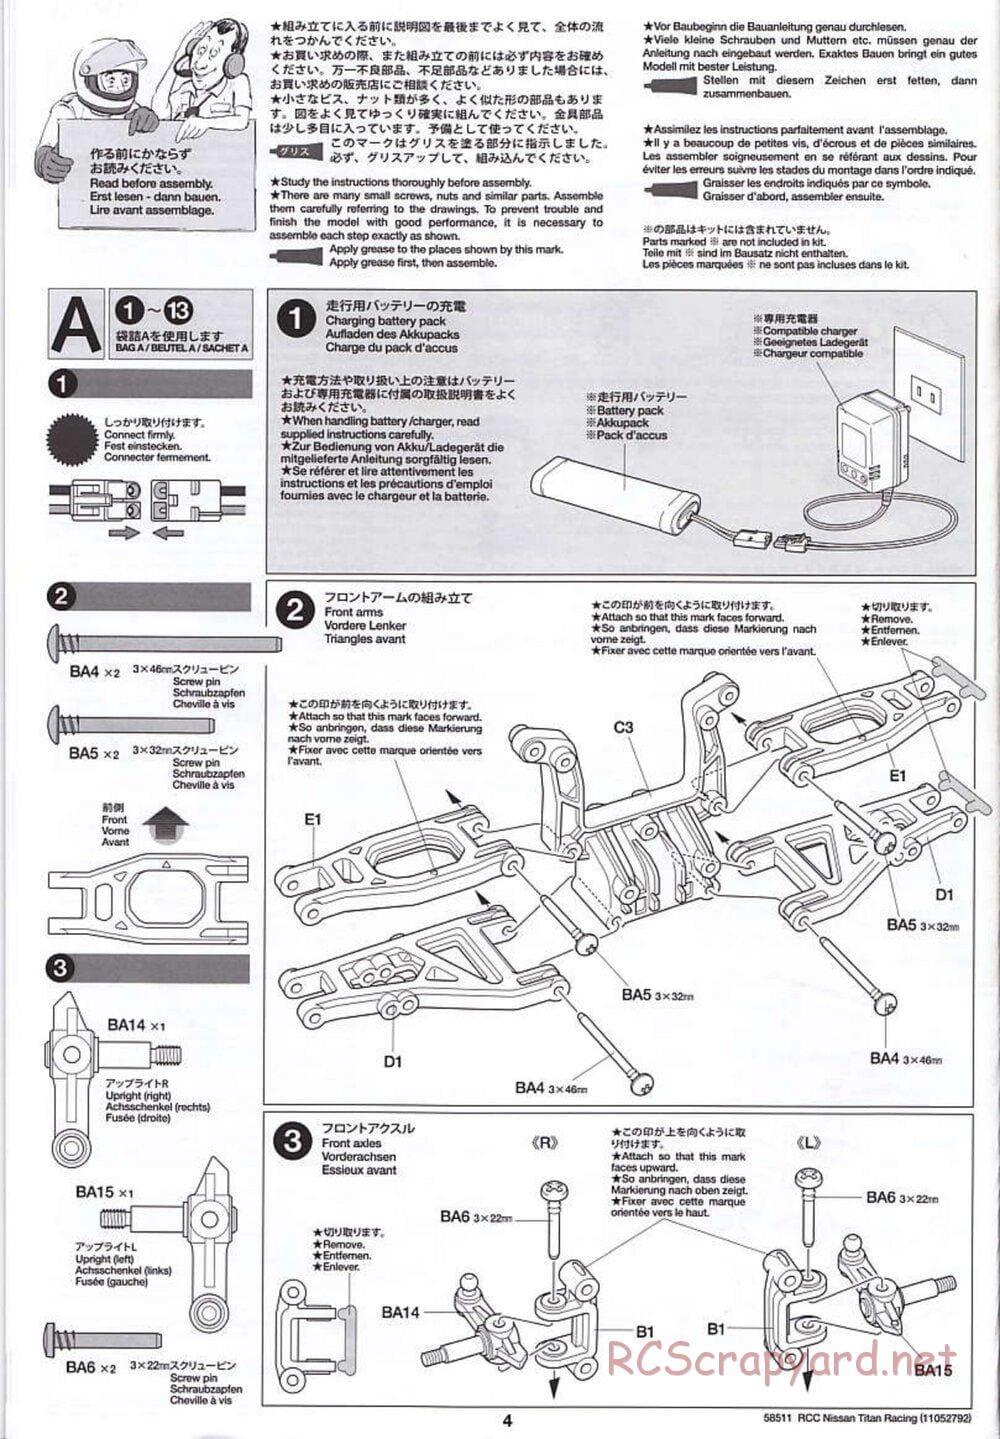 Tamiya - Nissan Titan Chassis - Manual - Page 4